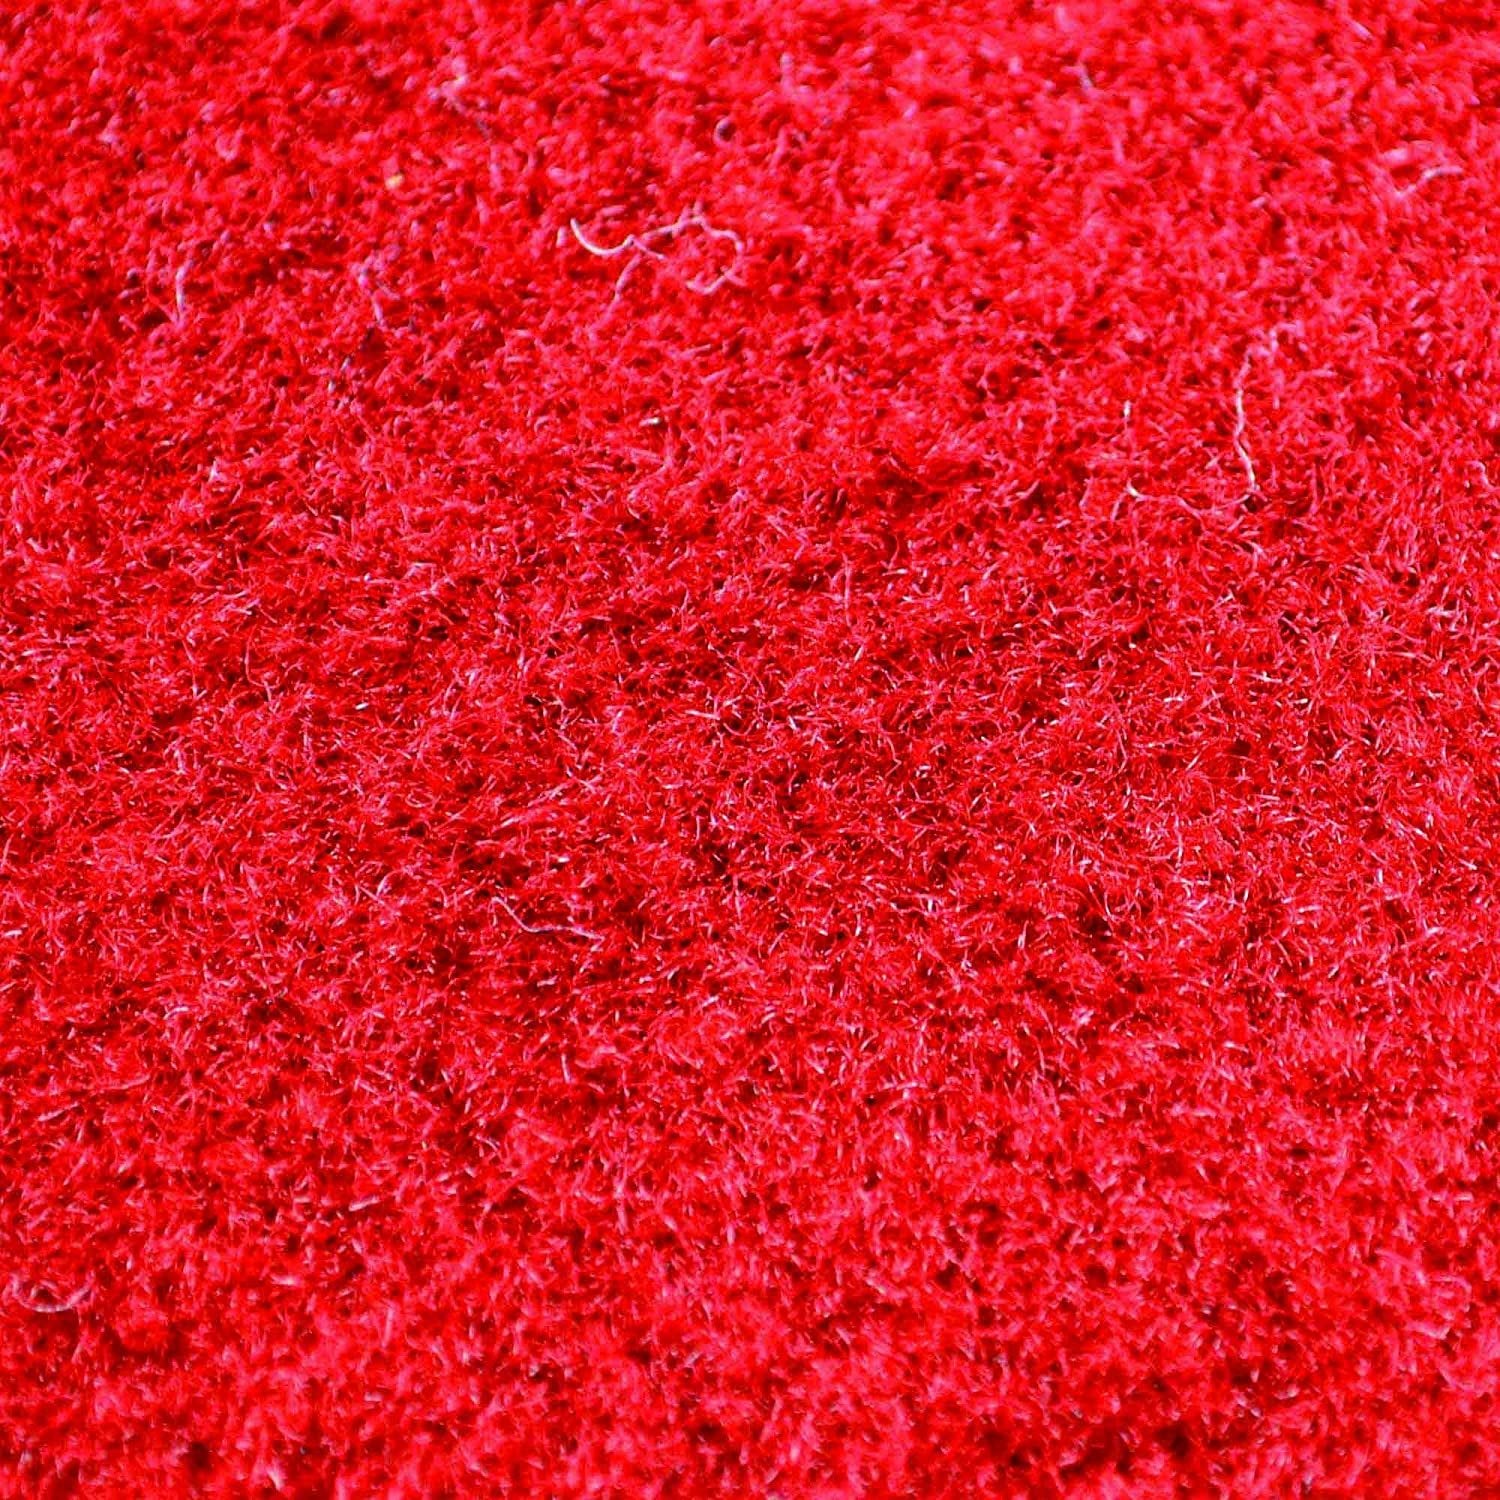 Detroit Red Wings Front Floor Mats, Carpet Car Set, 18x27 Inch, Nylon, Set of 2